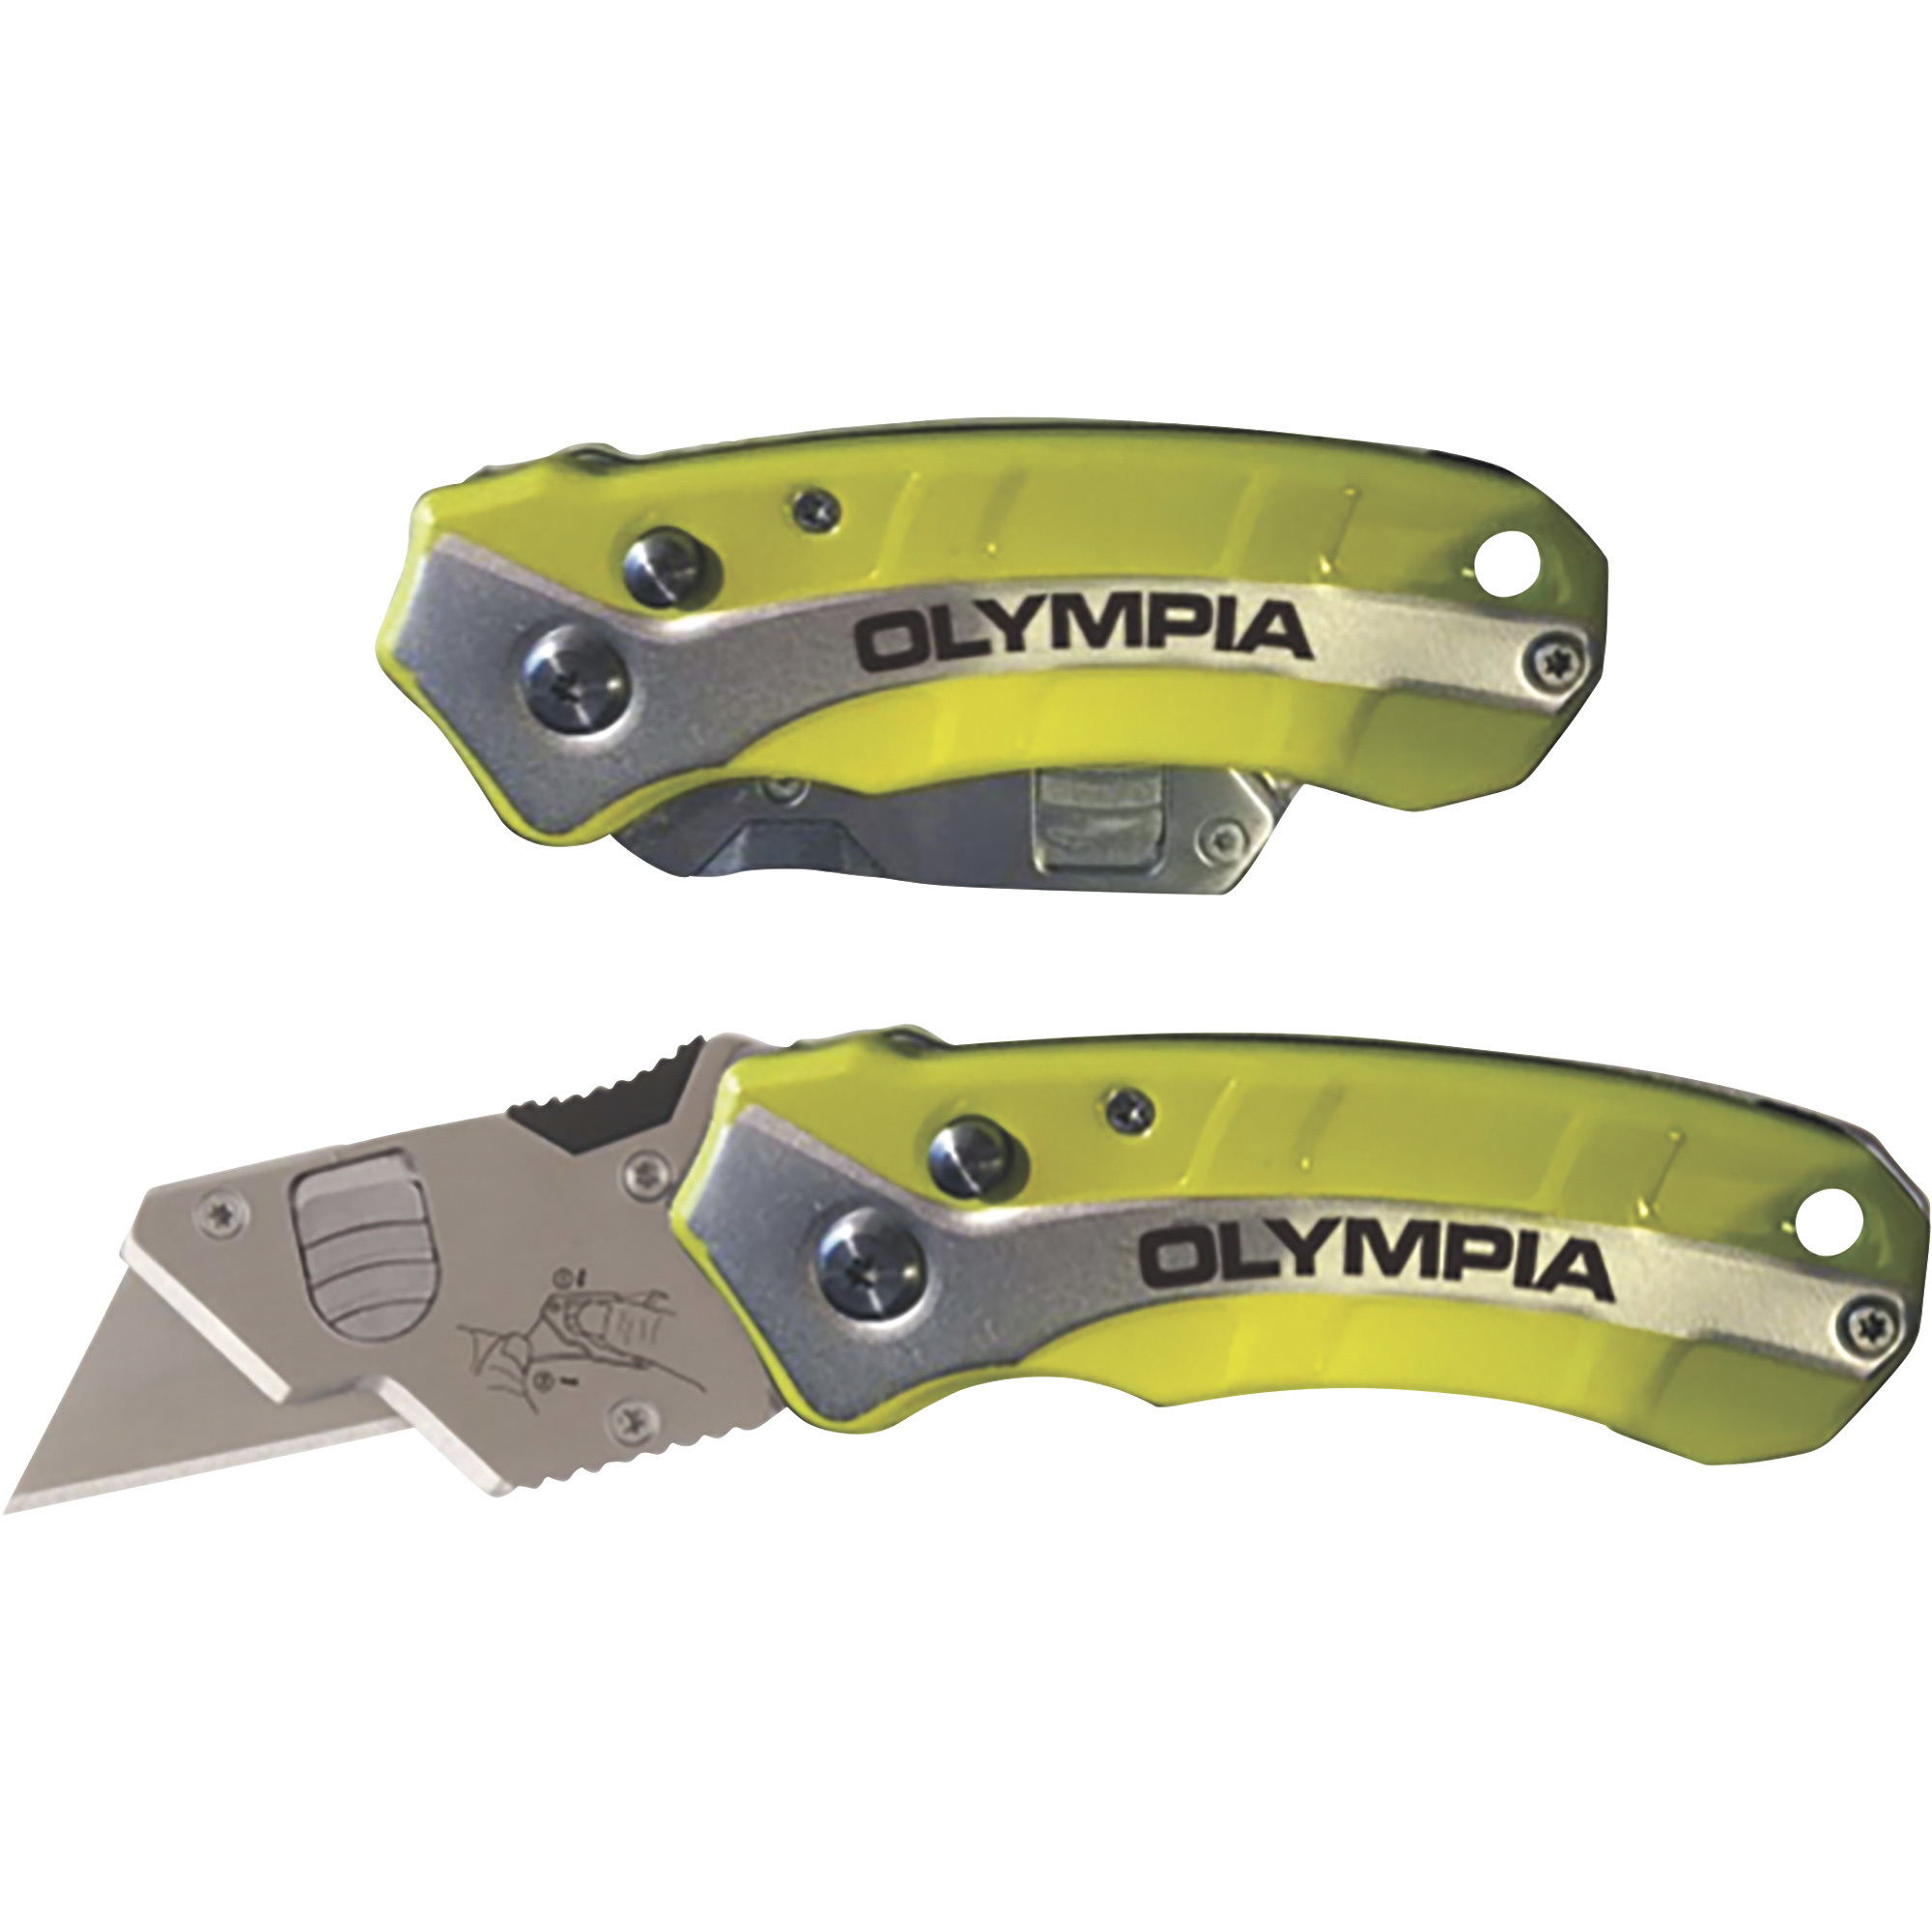 Olympia Tools Hi-Viz Turbo Folding Utility Knife, Model 33-205-203